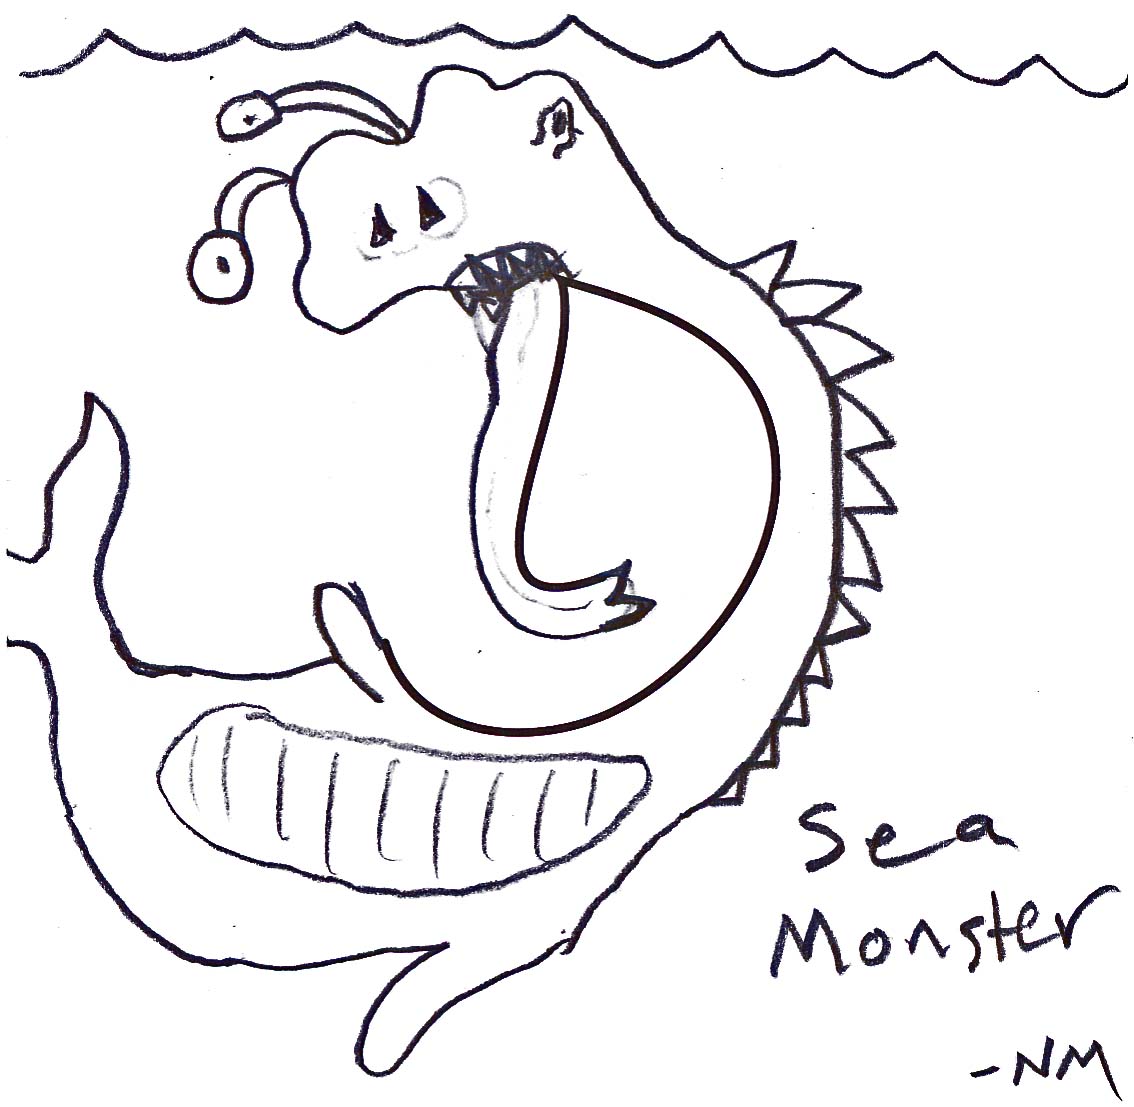 SEA monster